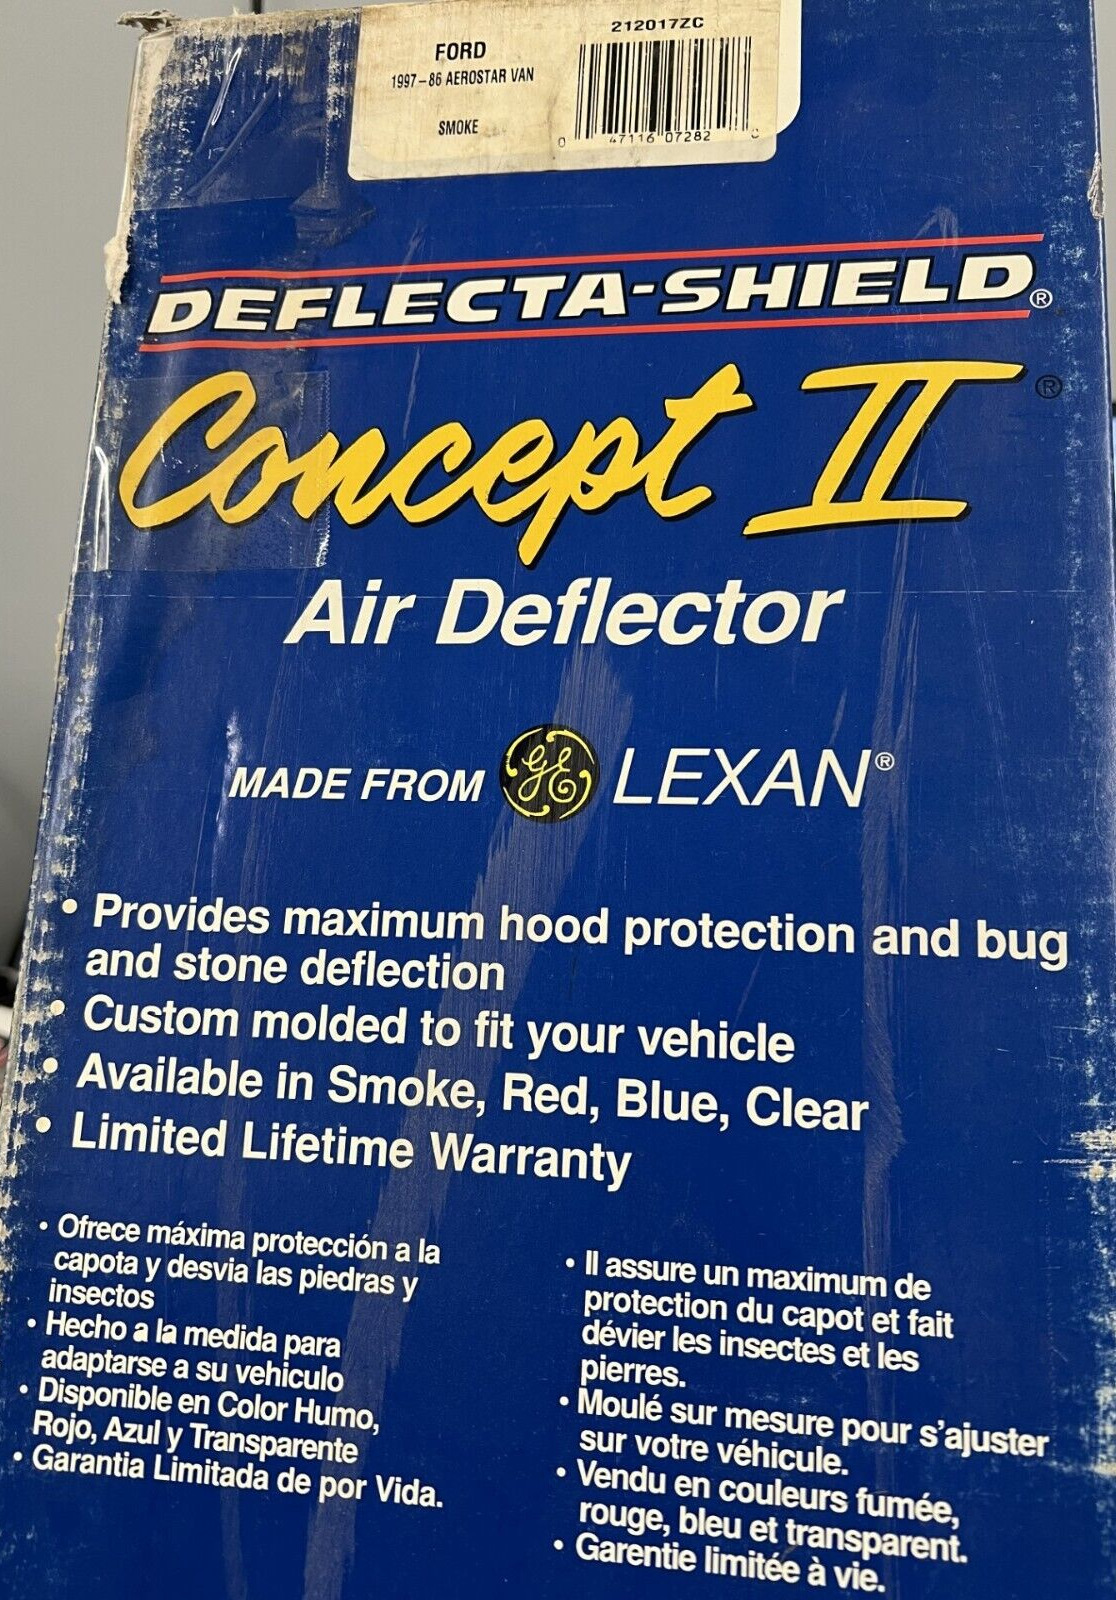 DEFLECTA SHIELD CONCEPT II AIR DEFLECTOR FORD 1997-1986 AEROSTAR VAN - SMOKE